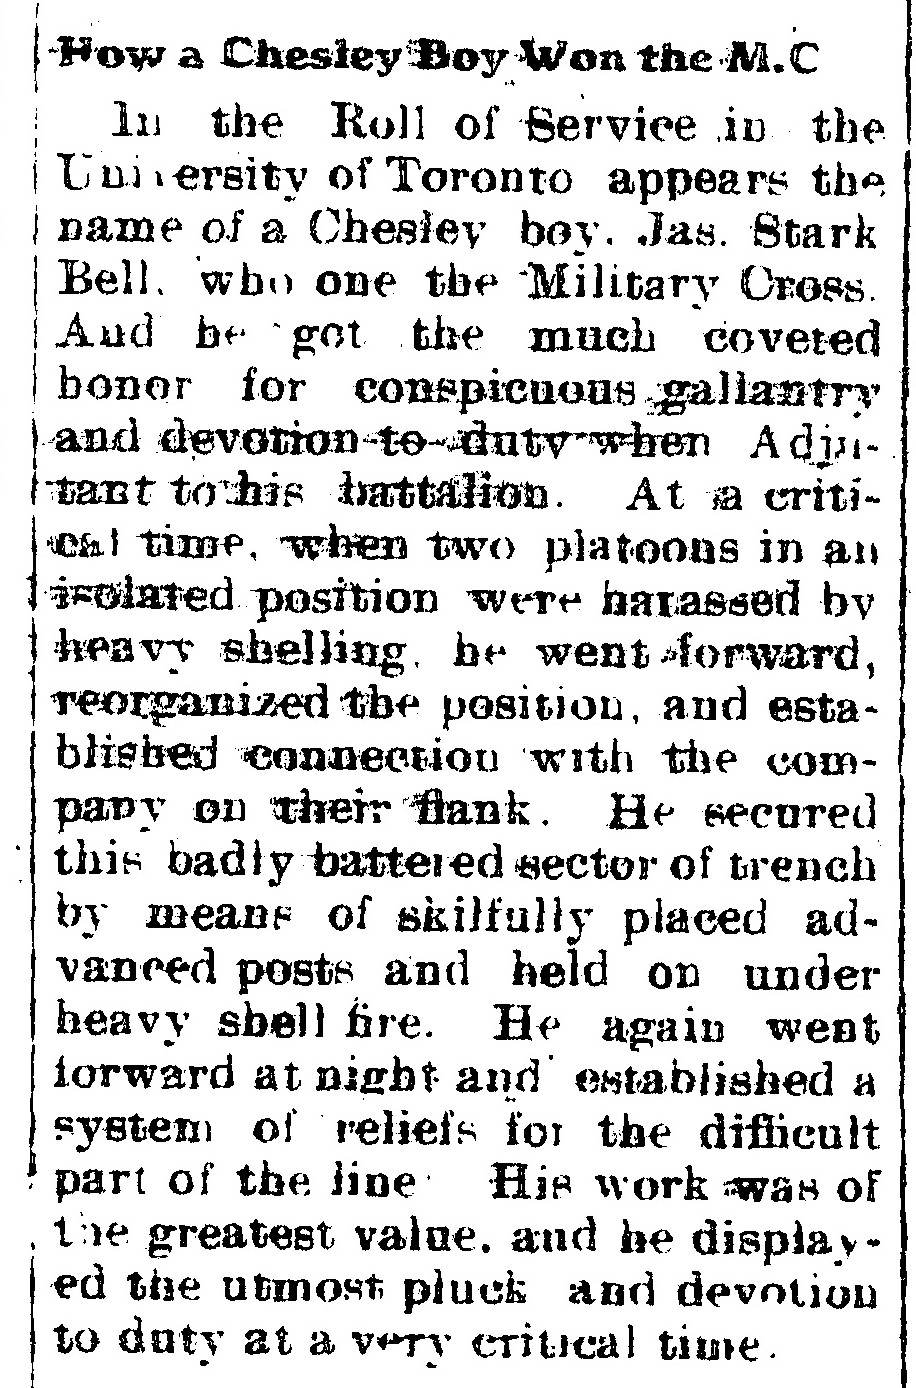 The Chesley Enterprise, April 18, 1918